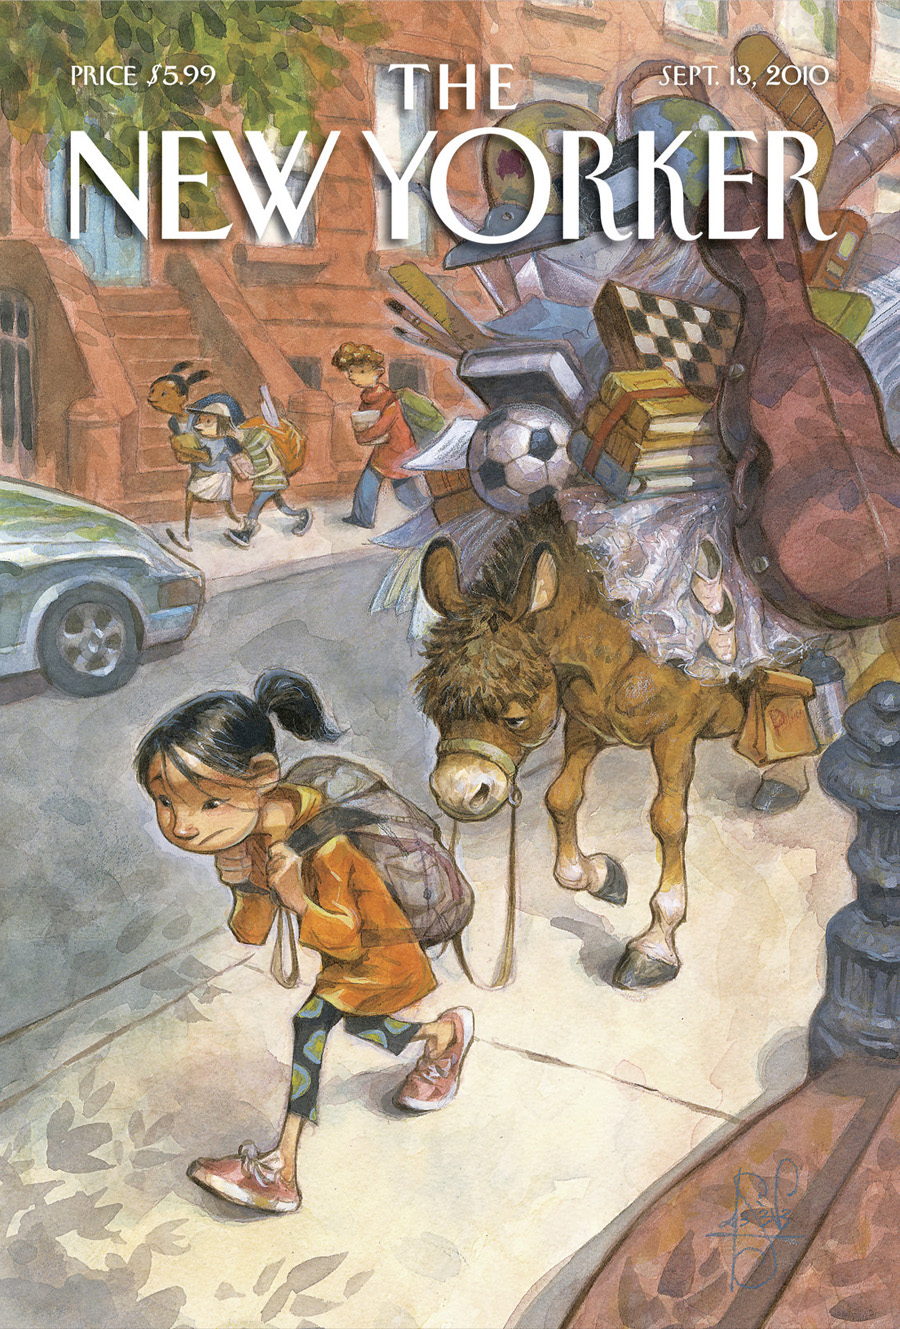 Cover of “The New Yorker,” September 13, 2010